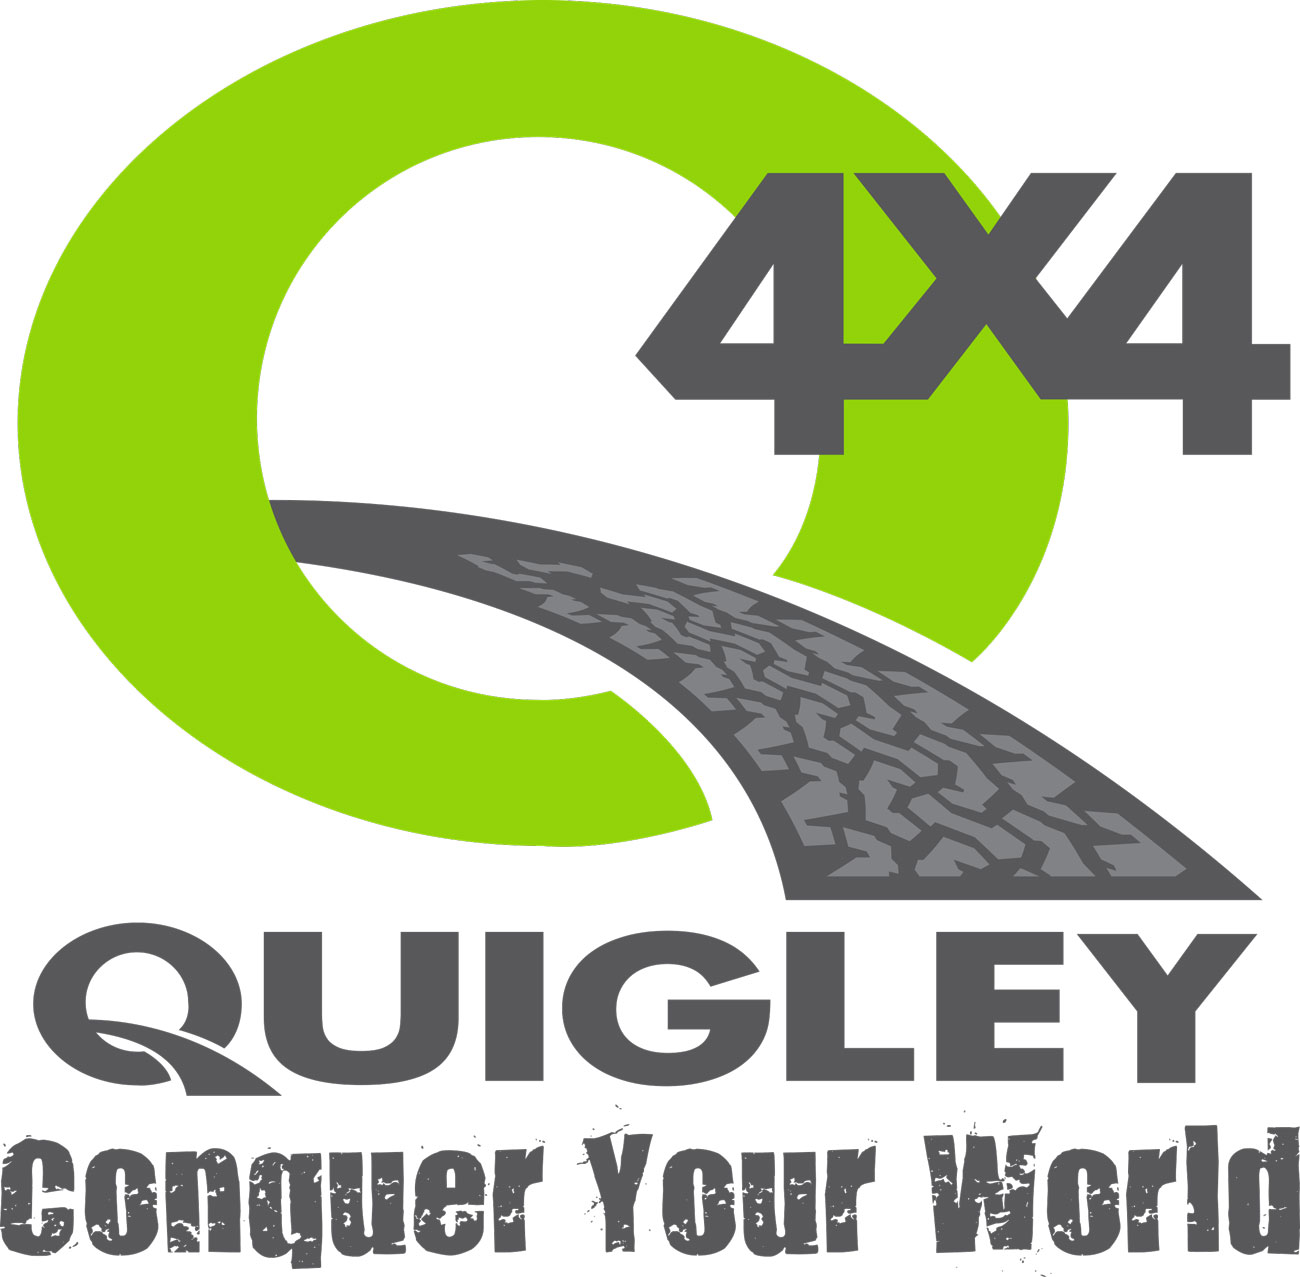 Quigley 4x4